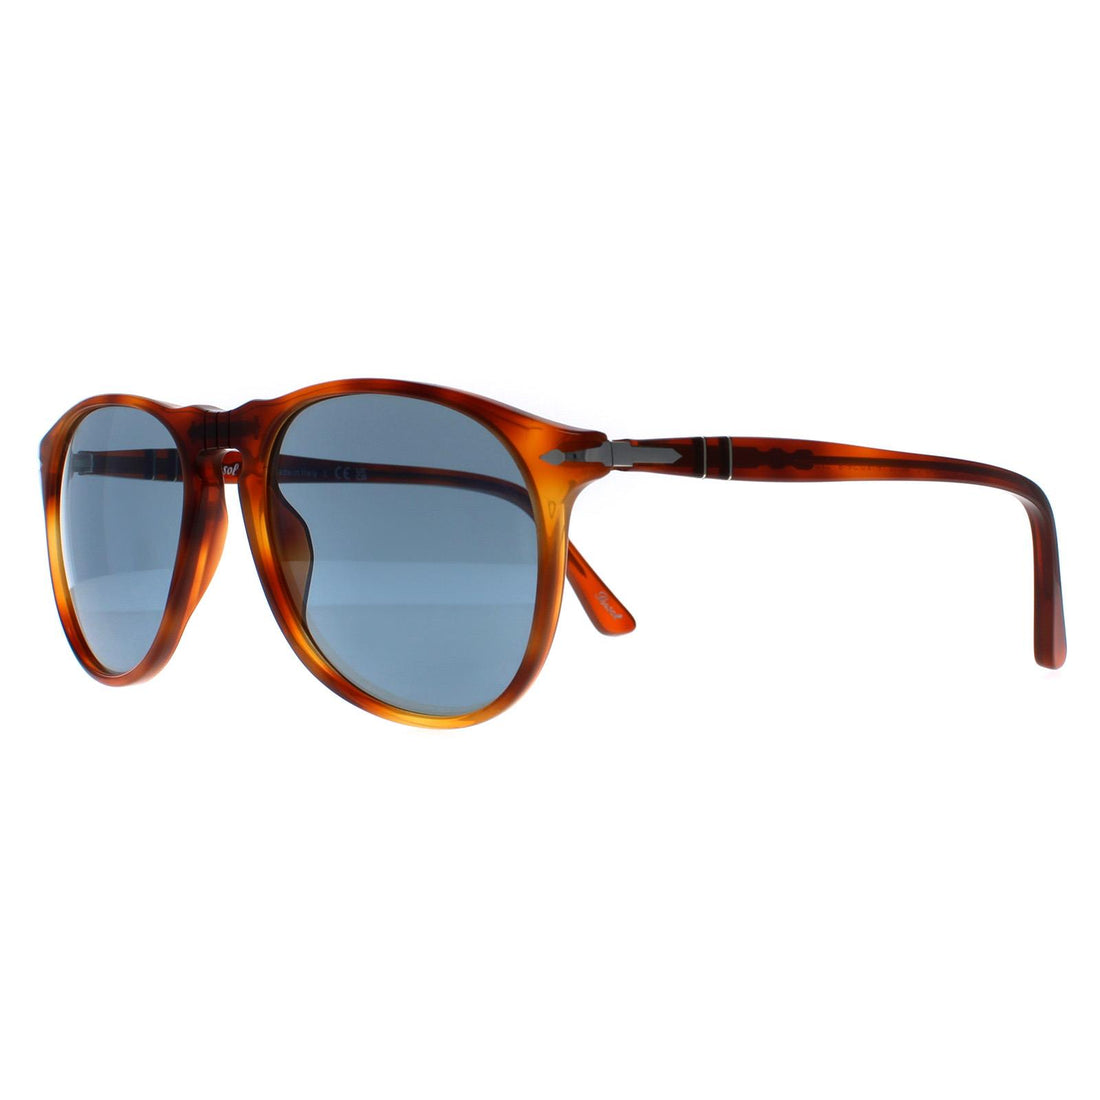 Persol Sunglasses 9649 96/56 Terra Di Siena Light Blue